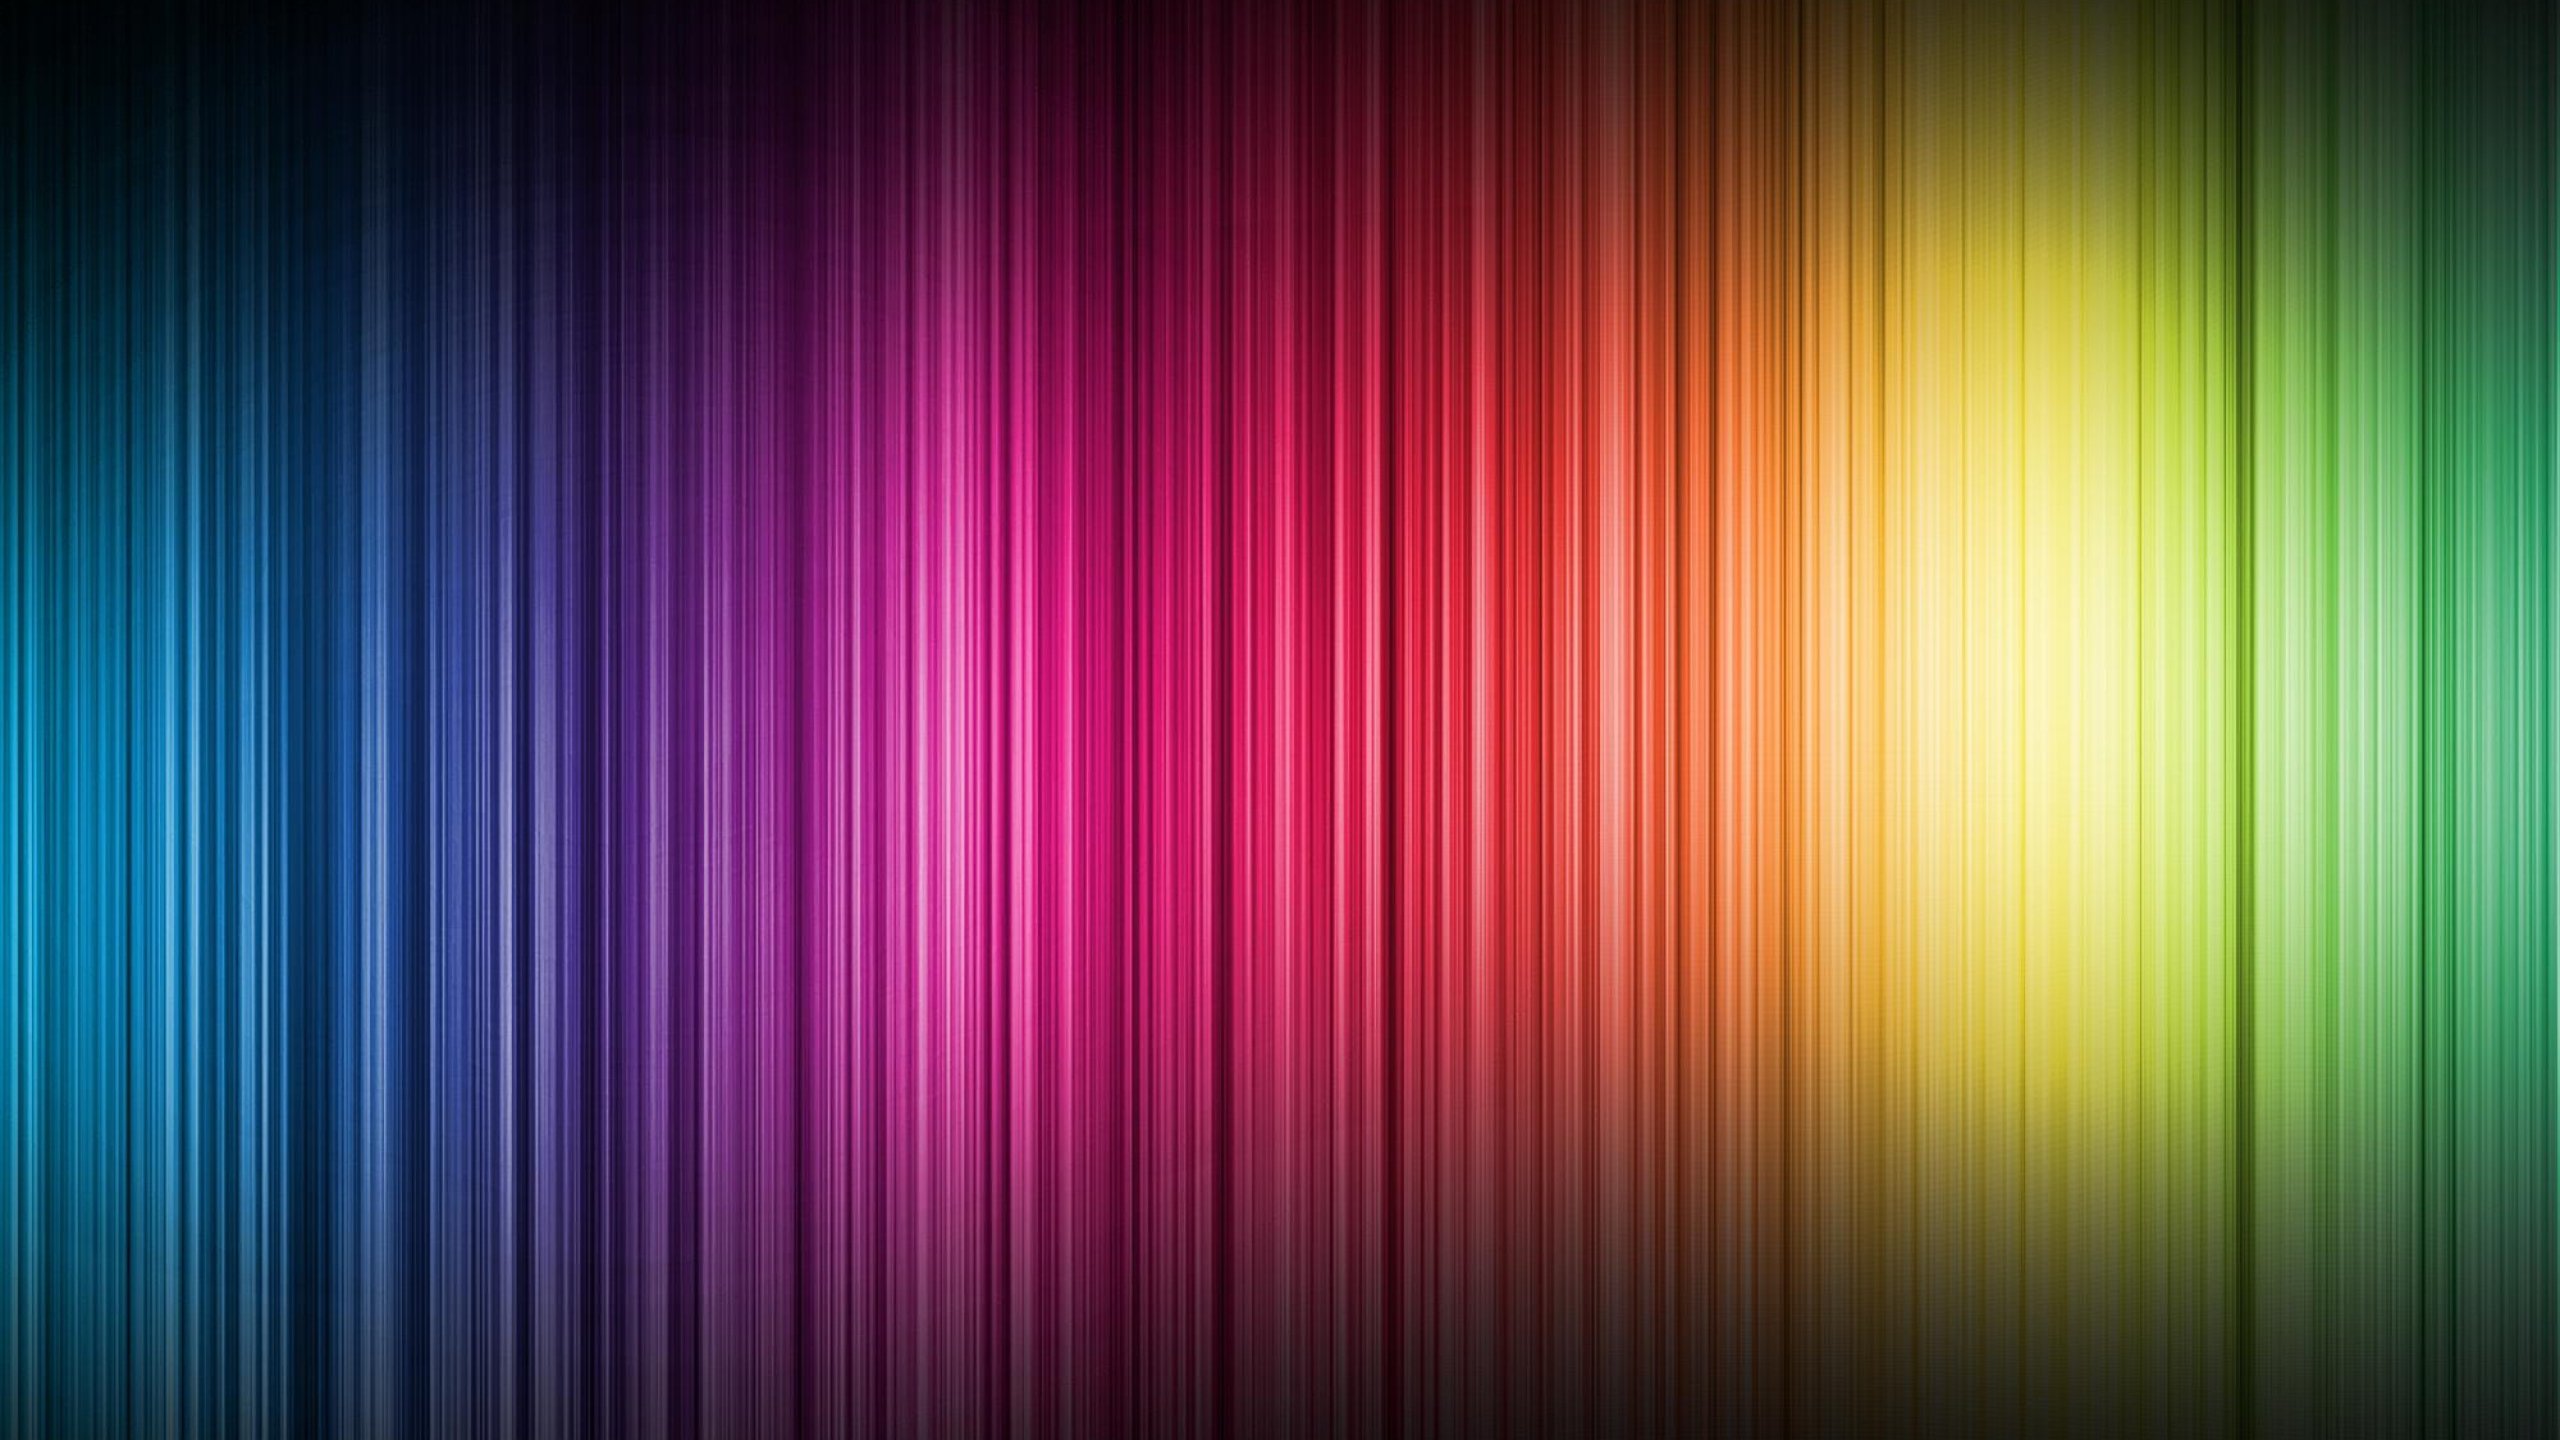 Free download Download Wallpaper 2560x1440 color spectrum bands vertical Mac iMac [2560x1440] for your Desktop, Mobile & Tablet. Explore 1440 x 2560 Wallpaper Vertical x 2560 Phone Wallpaper, 2160 X 1440 Wallpaper, Quad HD Wallpaper